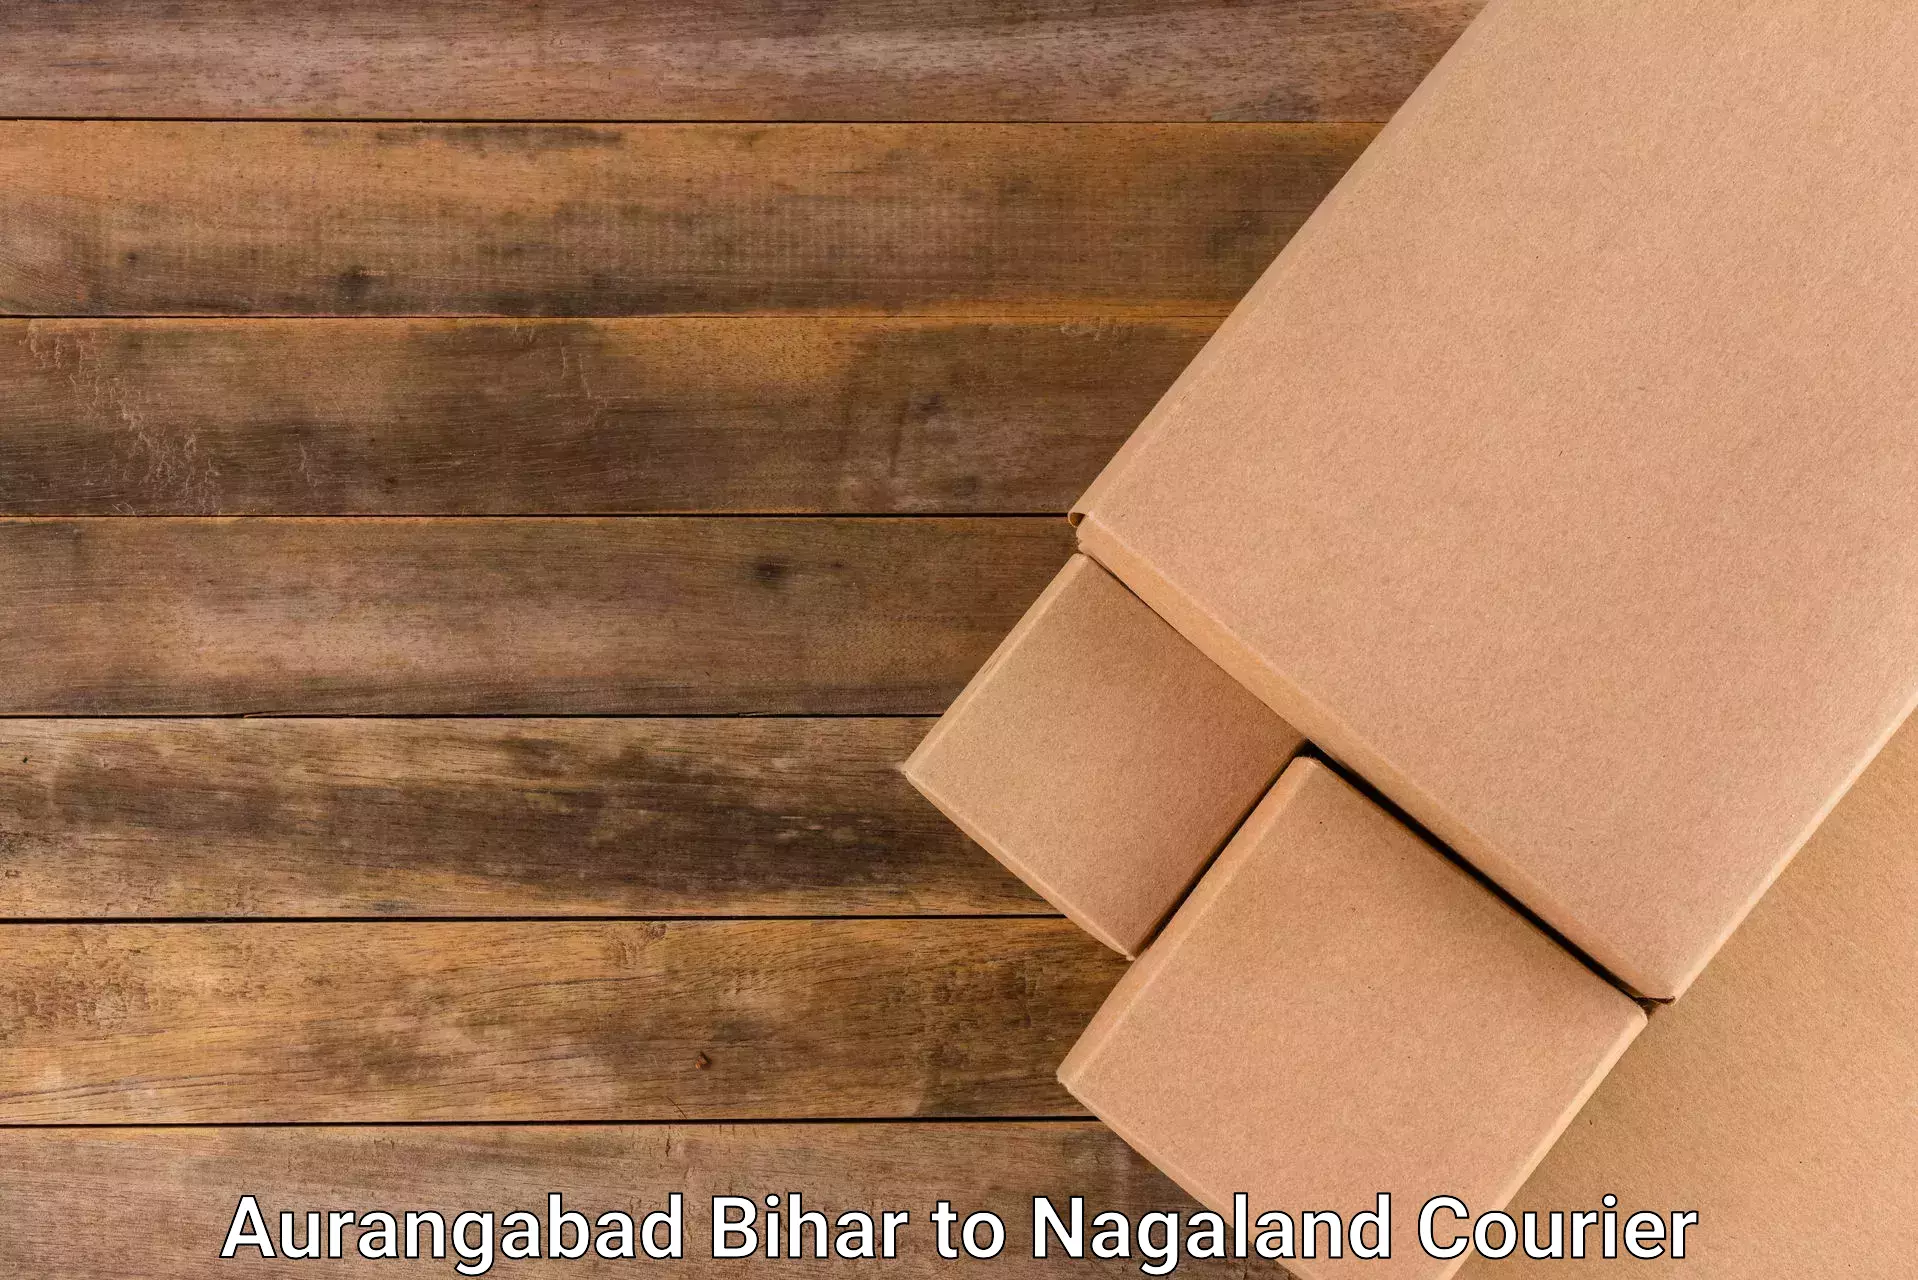 Global parcel delivery Aurangabad Bihar to Dimapur